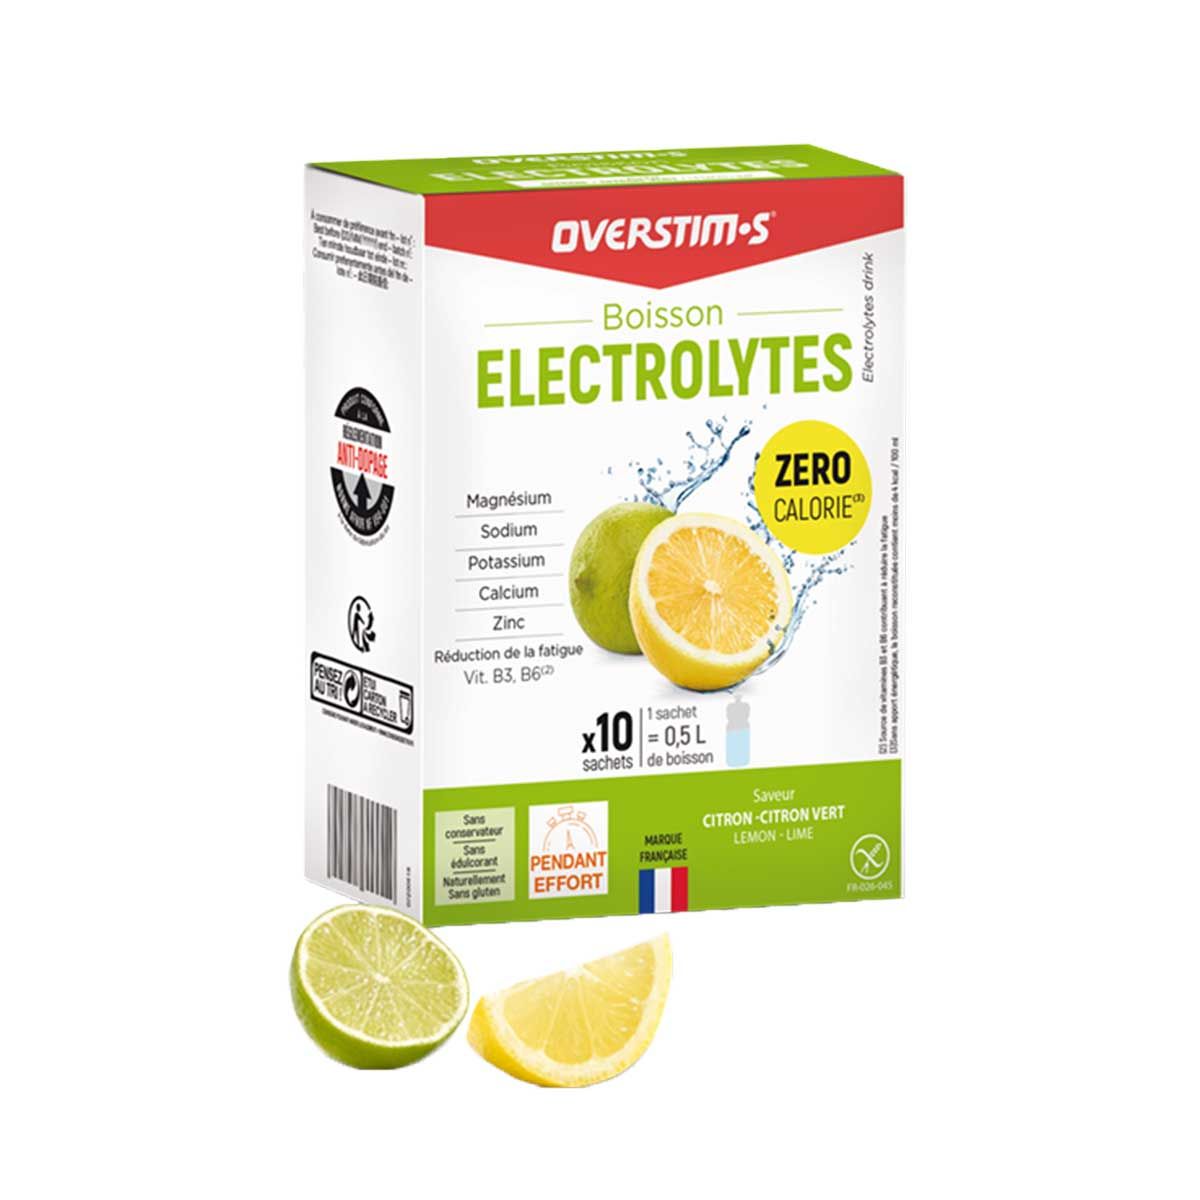 Overstim.s lectrolyte drink x 10 sachets - Lemon, lime